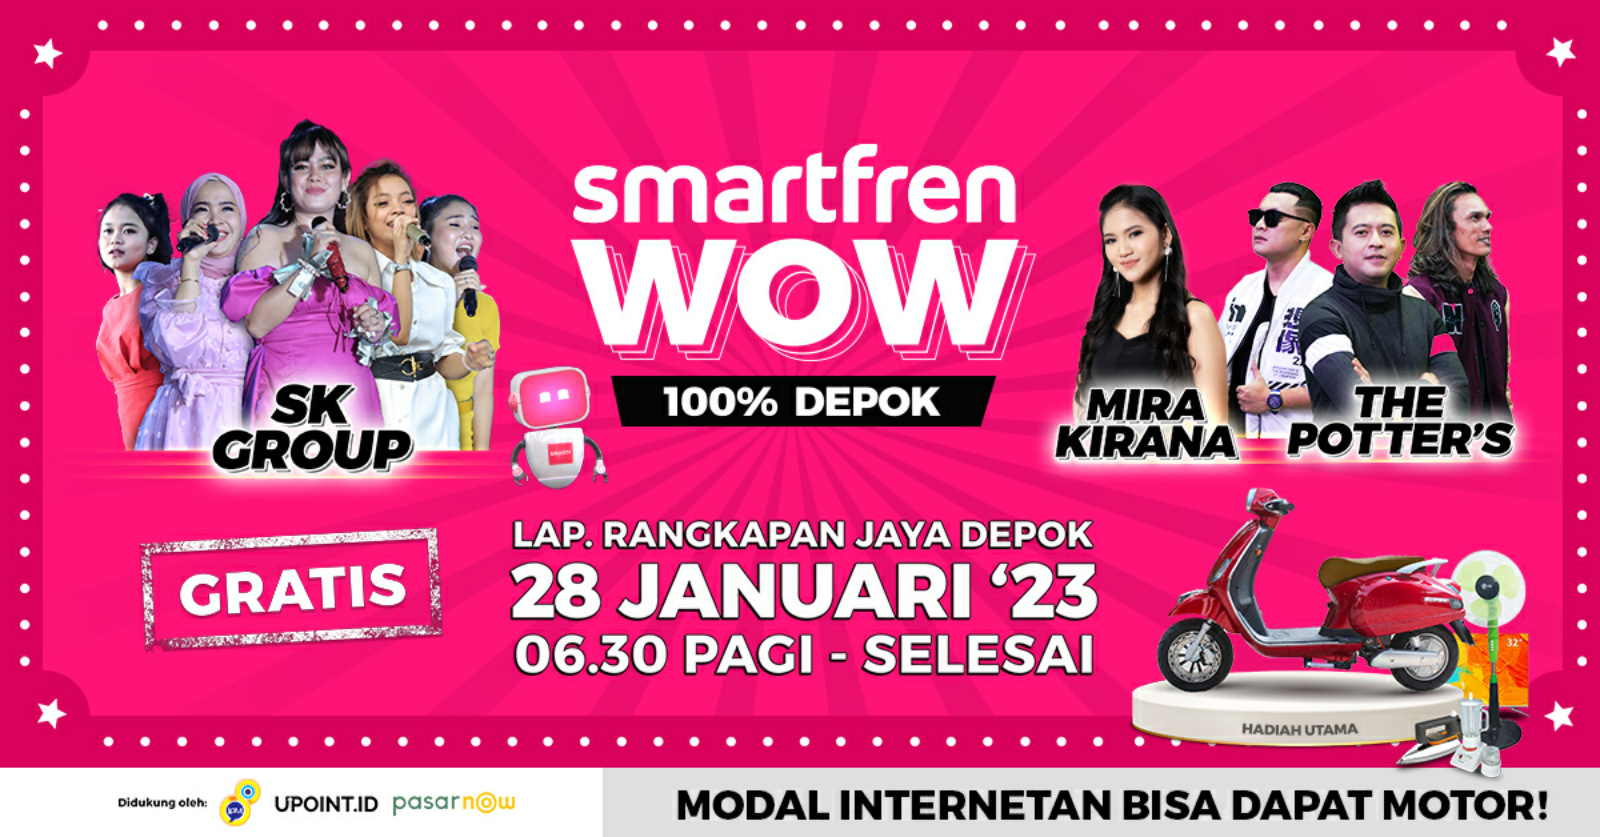 Smartfren WOW 100% untuk Indonesia Dorong Pertumbuhan UMKM